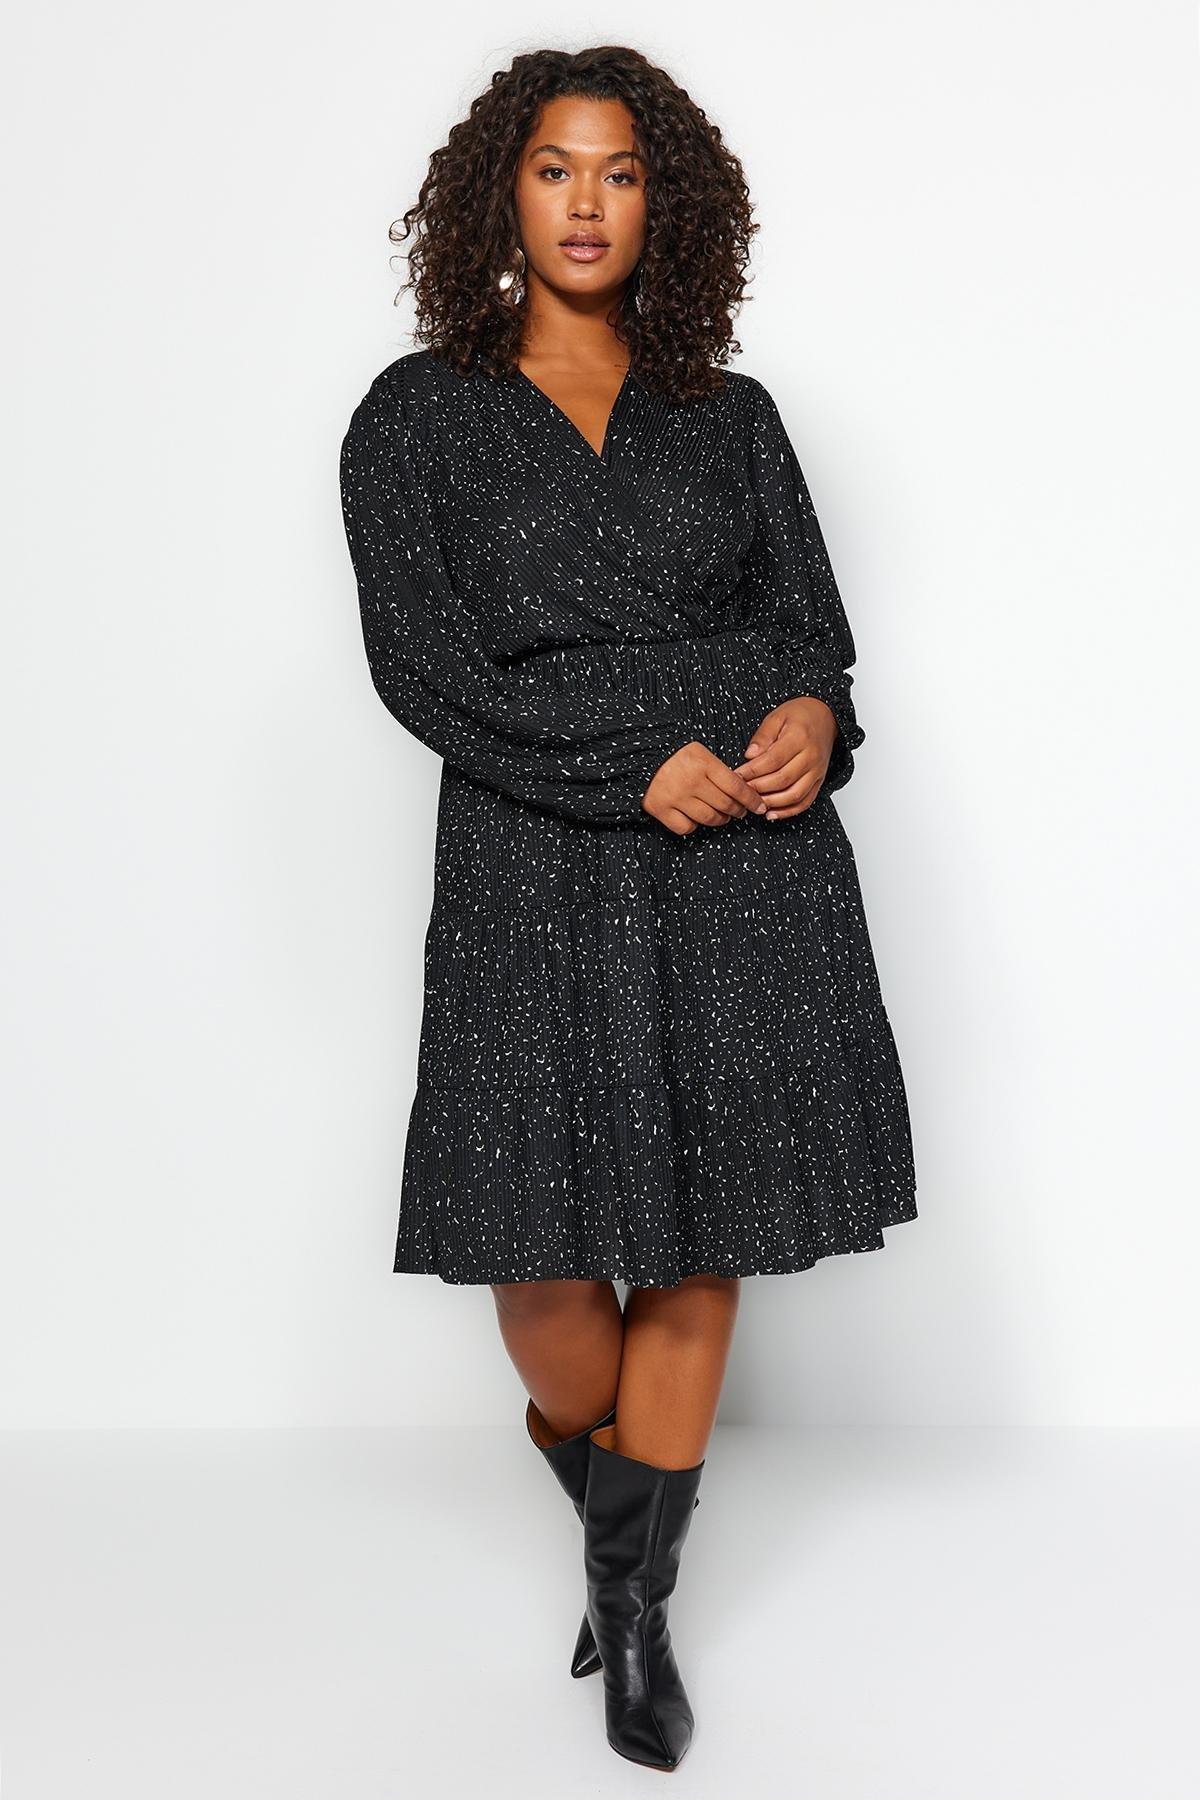 Trendyol - Black A-Line Plus Size Mini Dress